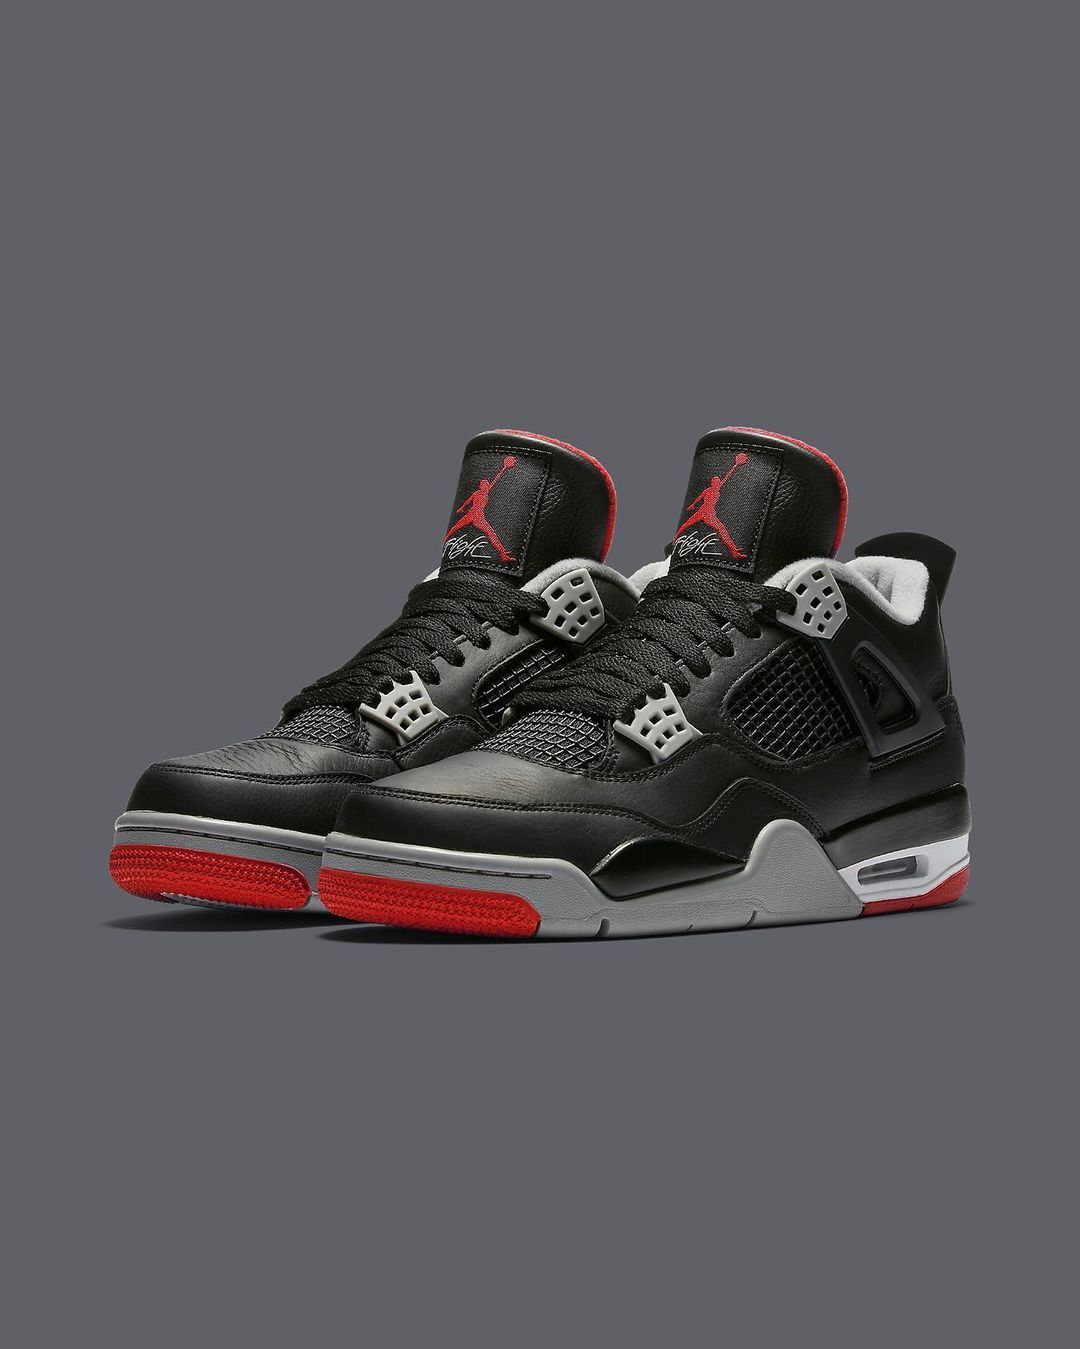 Air Jordan 4,Bred Reimagined  上次市价 3K+！期盼已久的「黑红」AJ4 渲染图泄露！